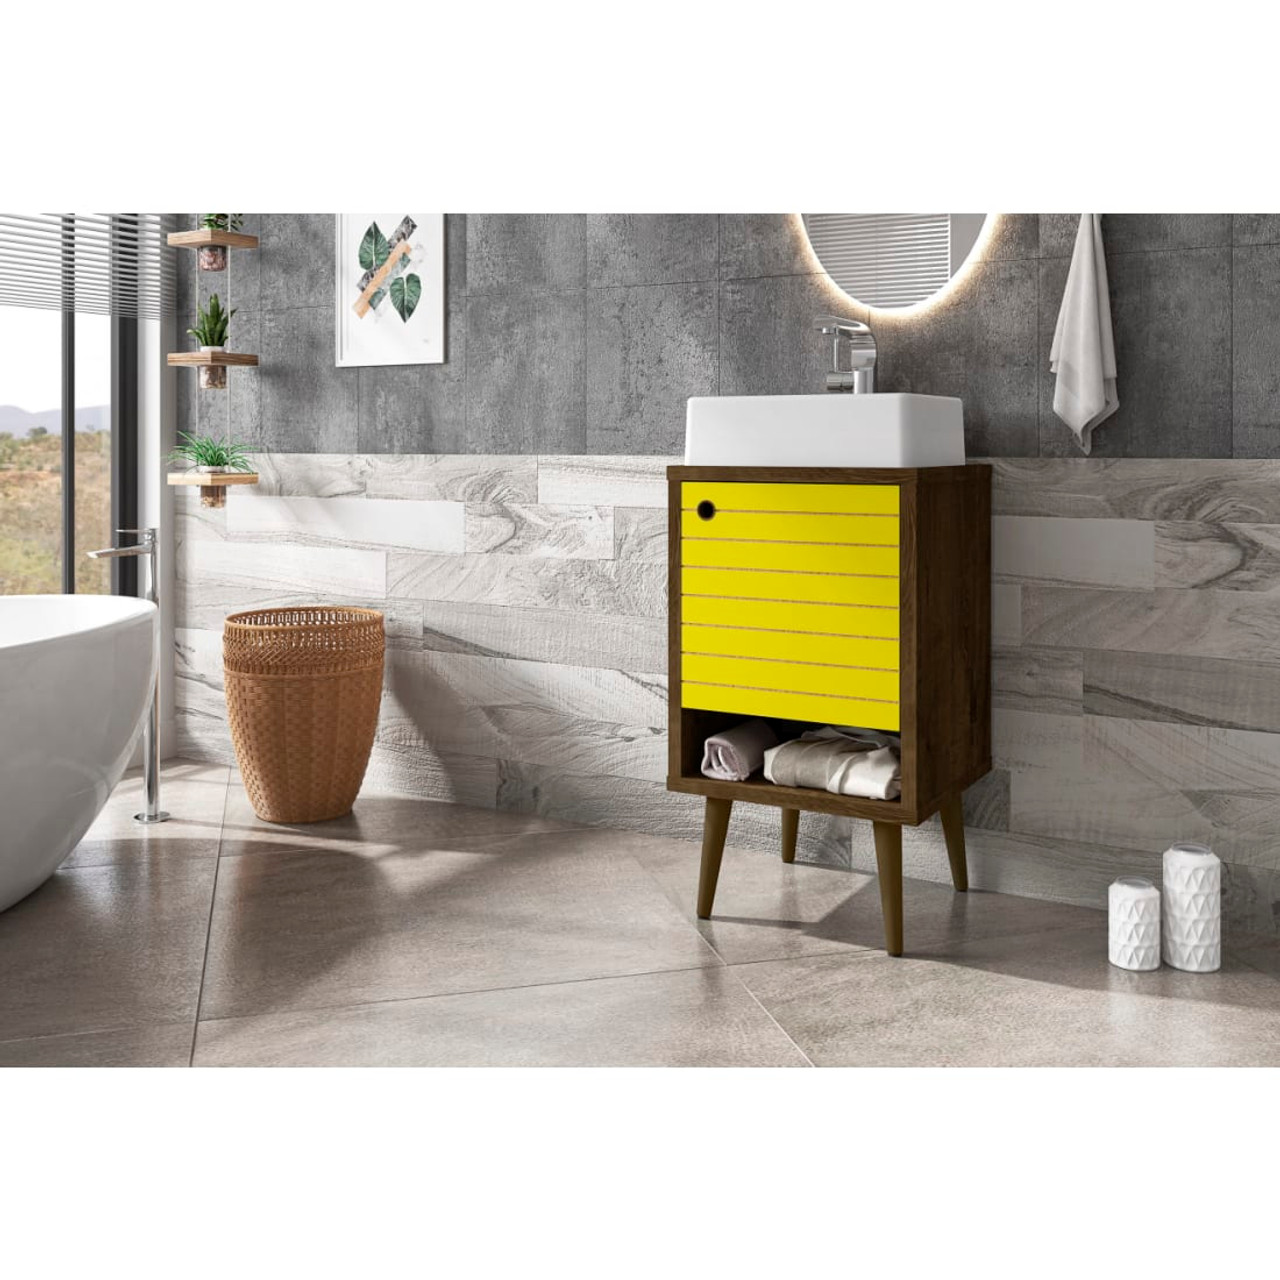 Liberty 17.71” Bathroom Vanity Sink in Rustic Brown and Yellow